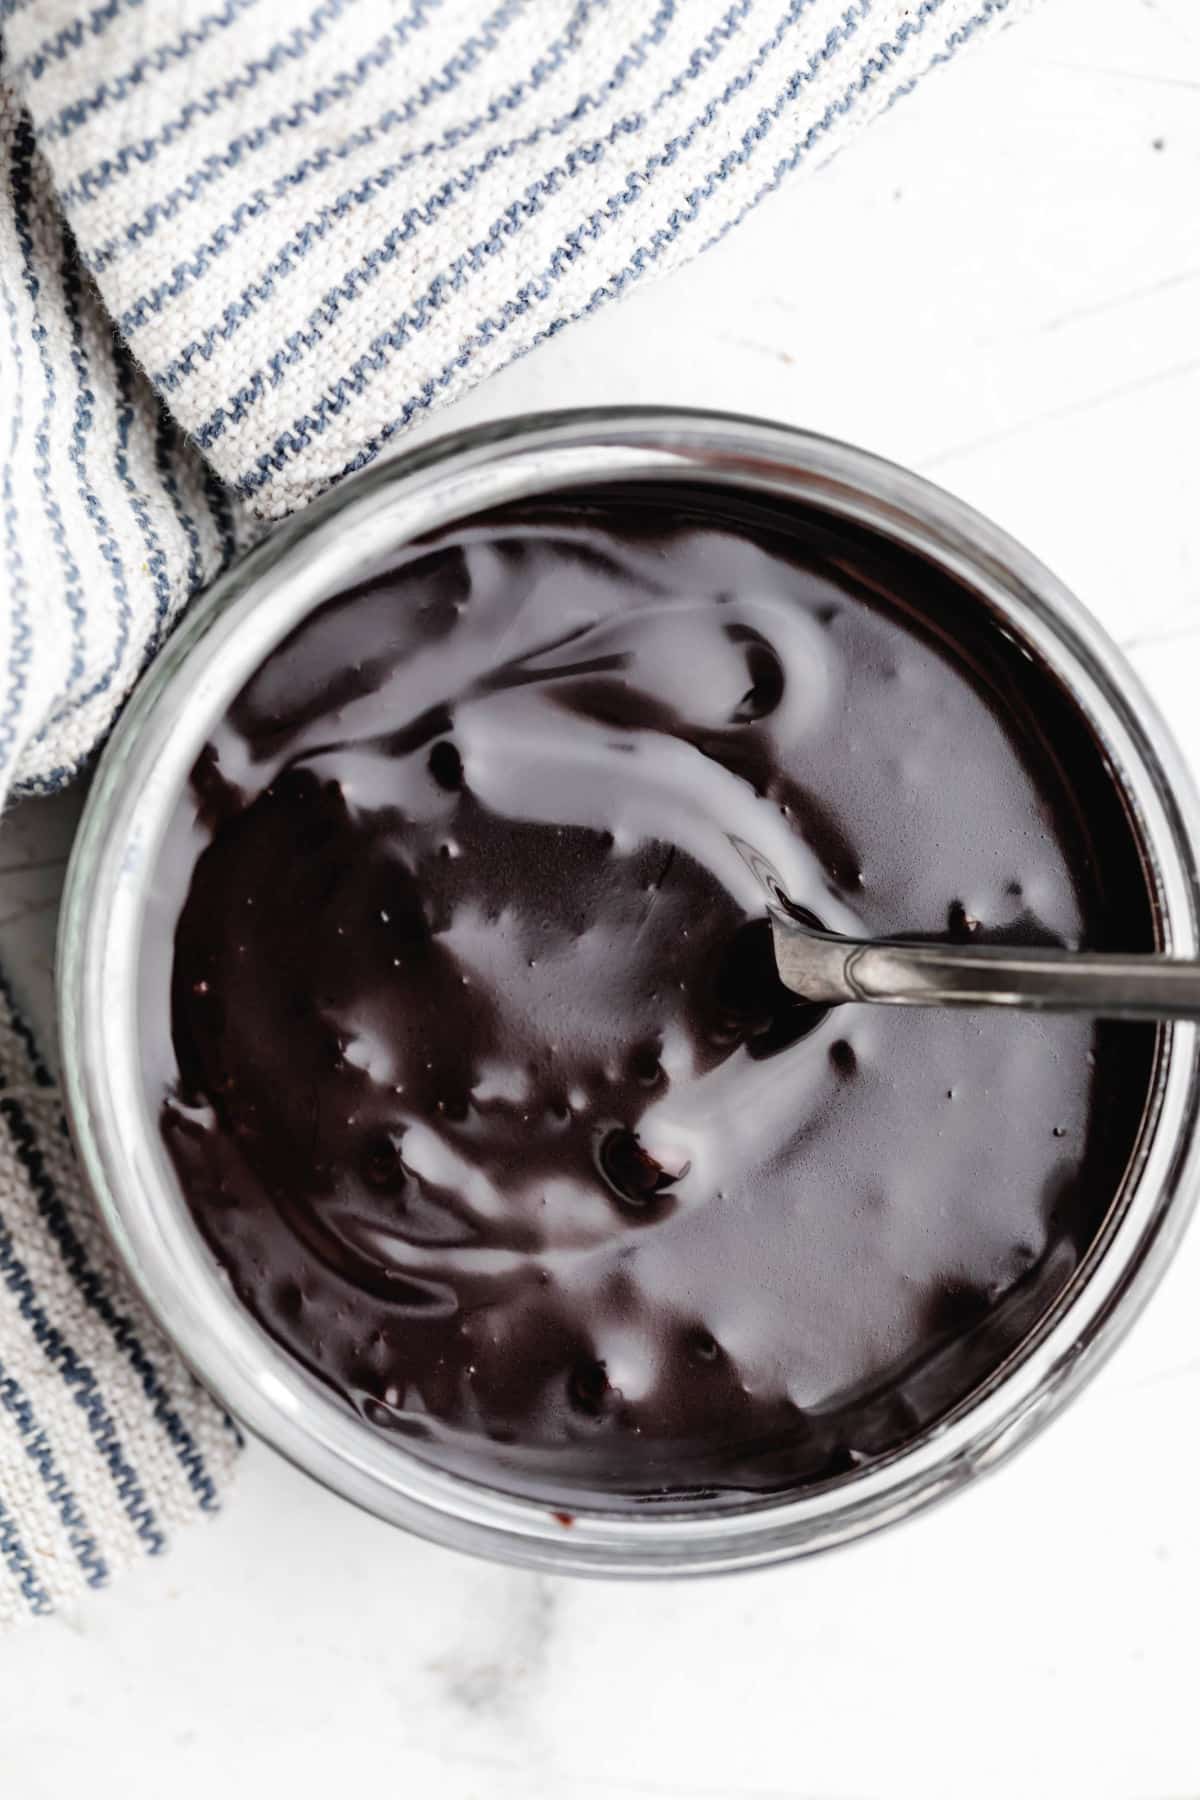 Vanilla extract stirred into a jar of homemade hot fudge sauce. 